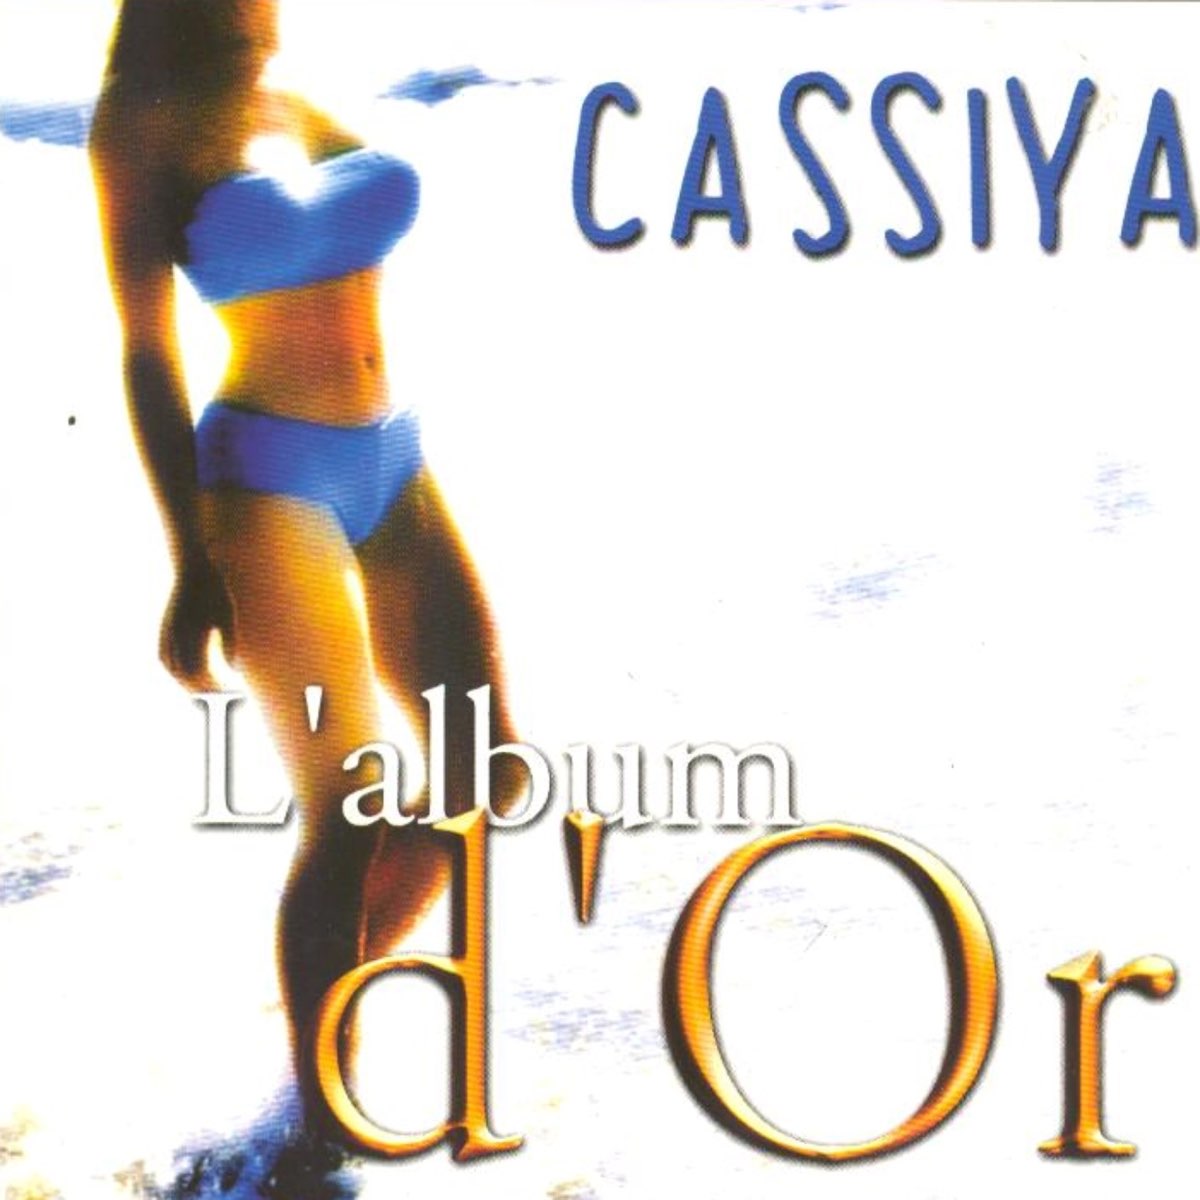 Cassiya, l'album d'Or (Sega) - Album by CASSIYA - Apple Music